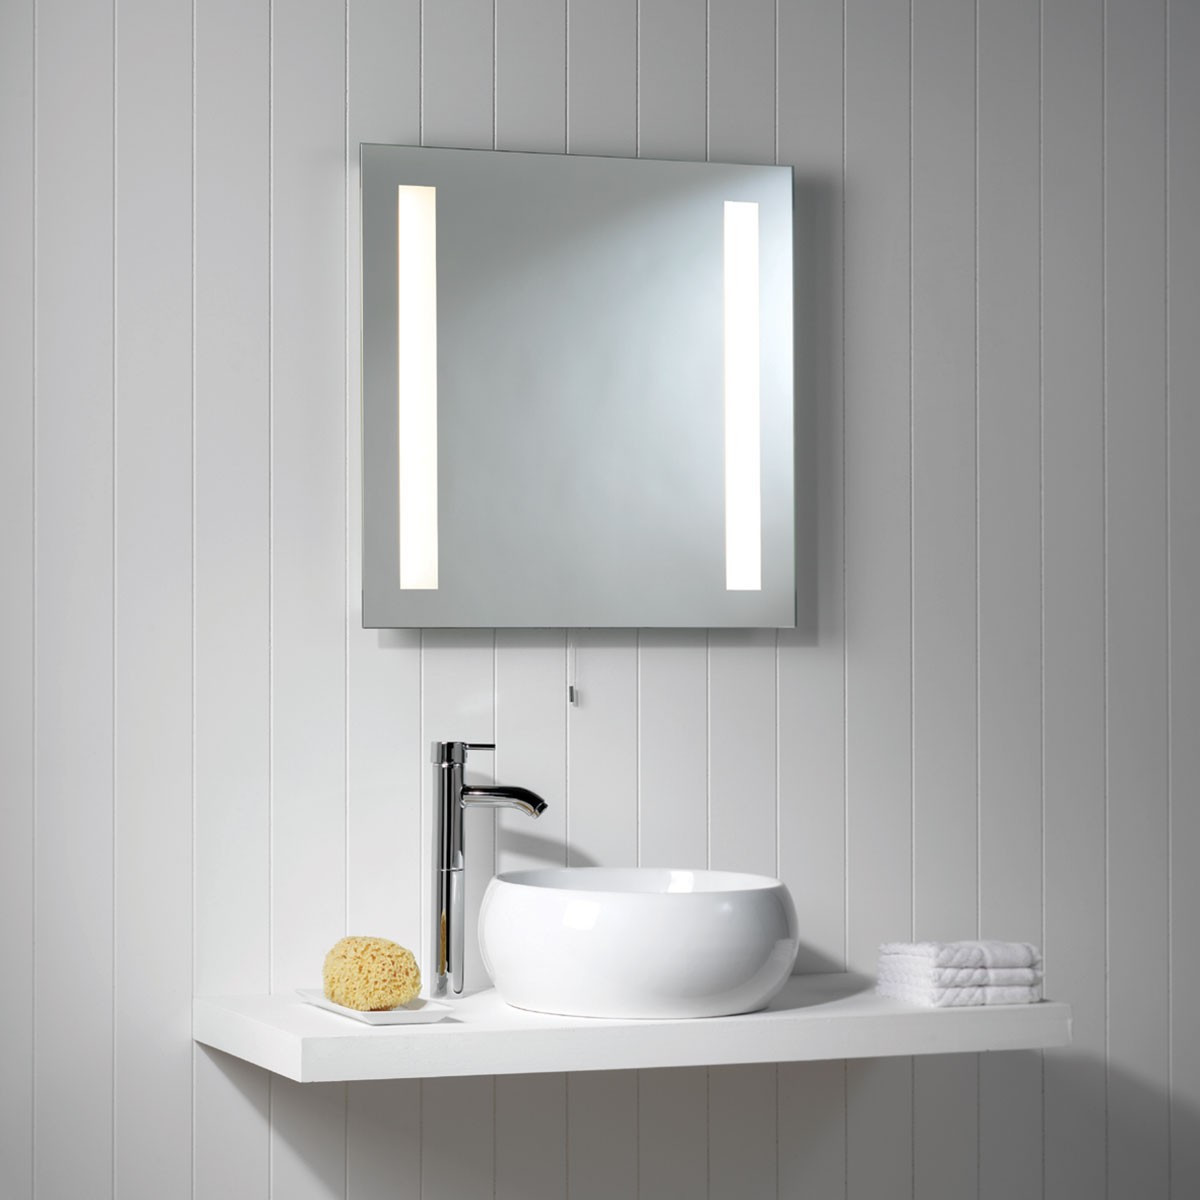 Lighting Bathroom Mirrors
 Astro Galaxy Bathroom Mirror Light at UK Electrical Supplies